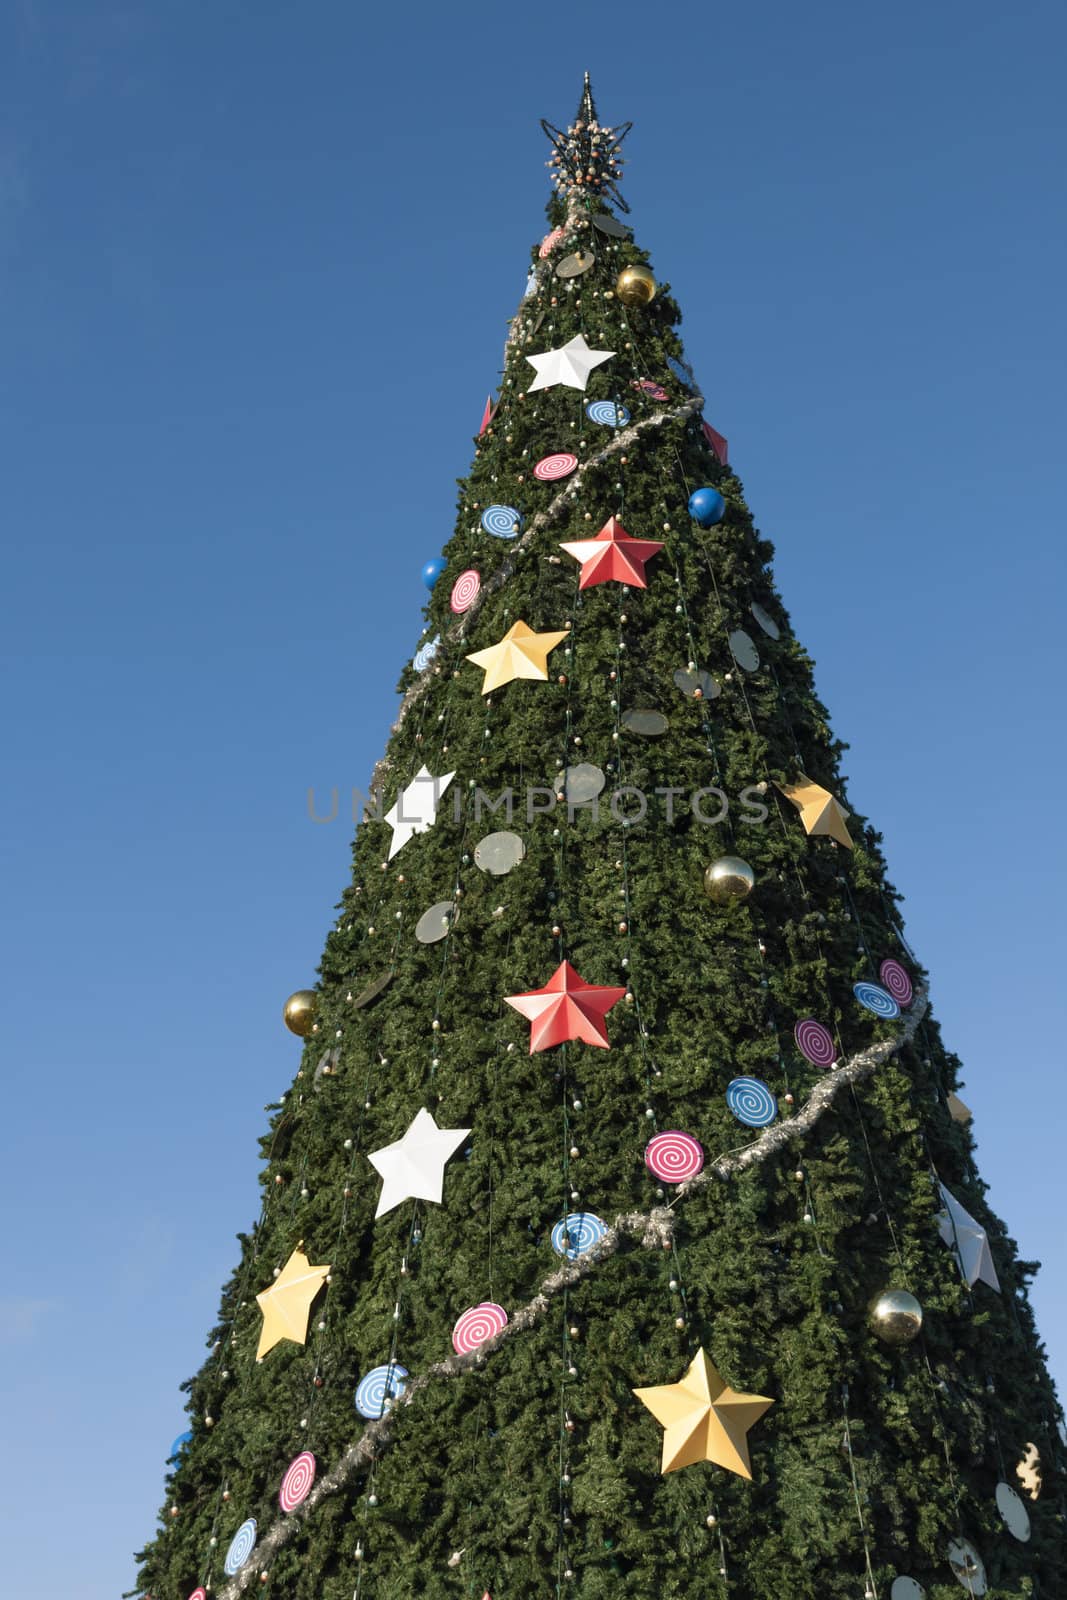 Christmas tree by yuriz